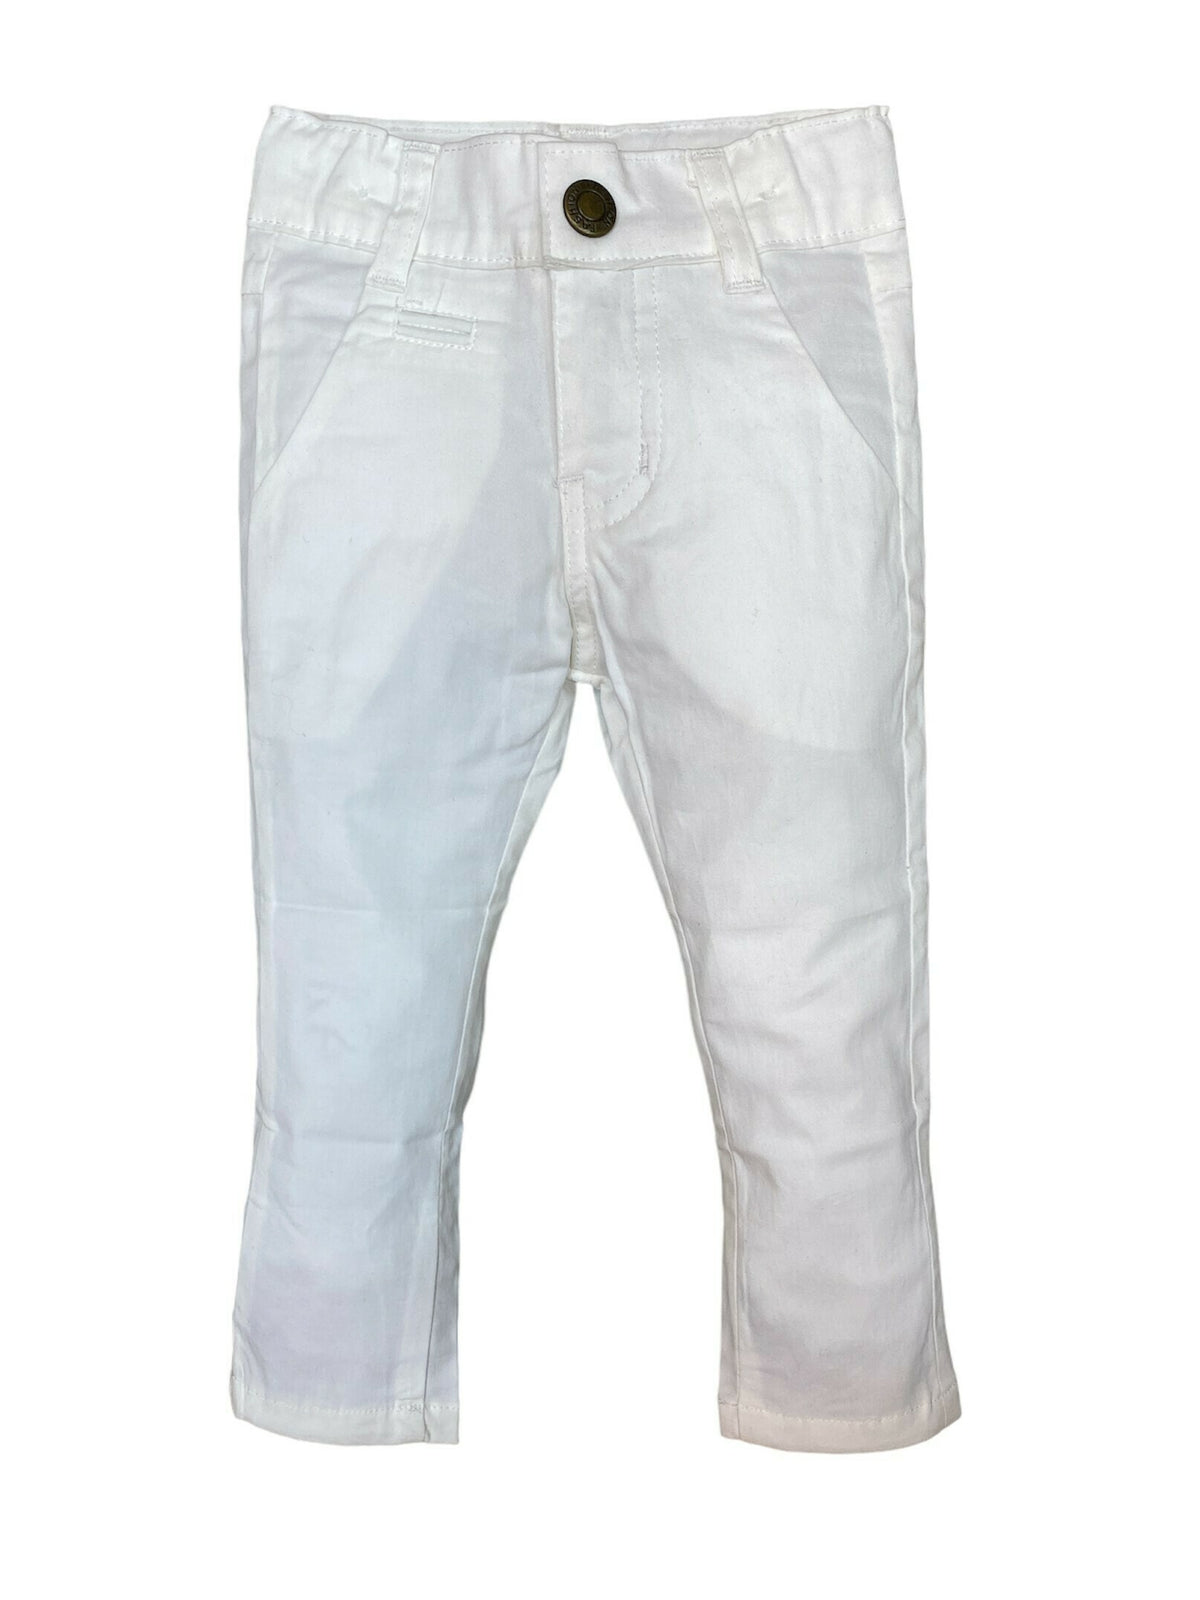 Cotton Pant Adjustable White